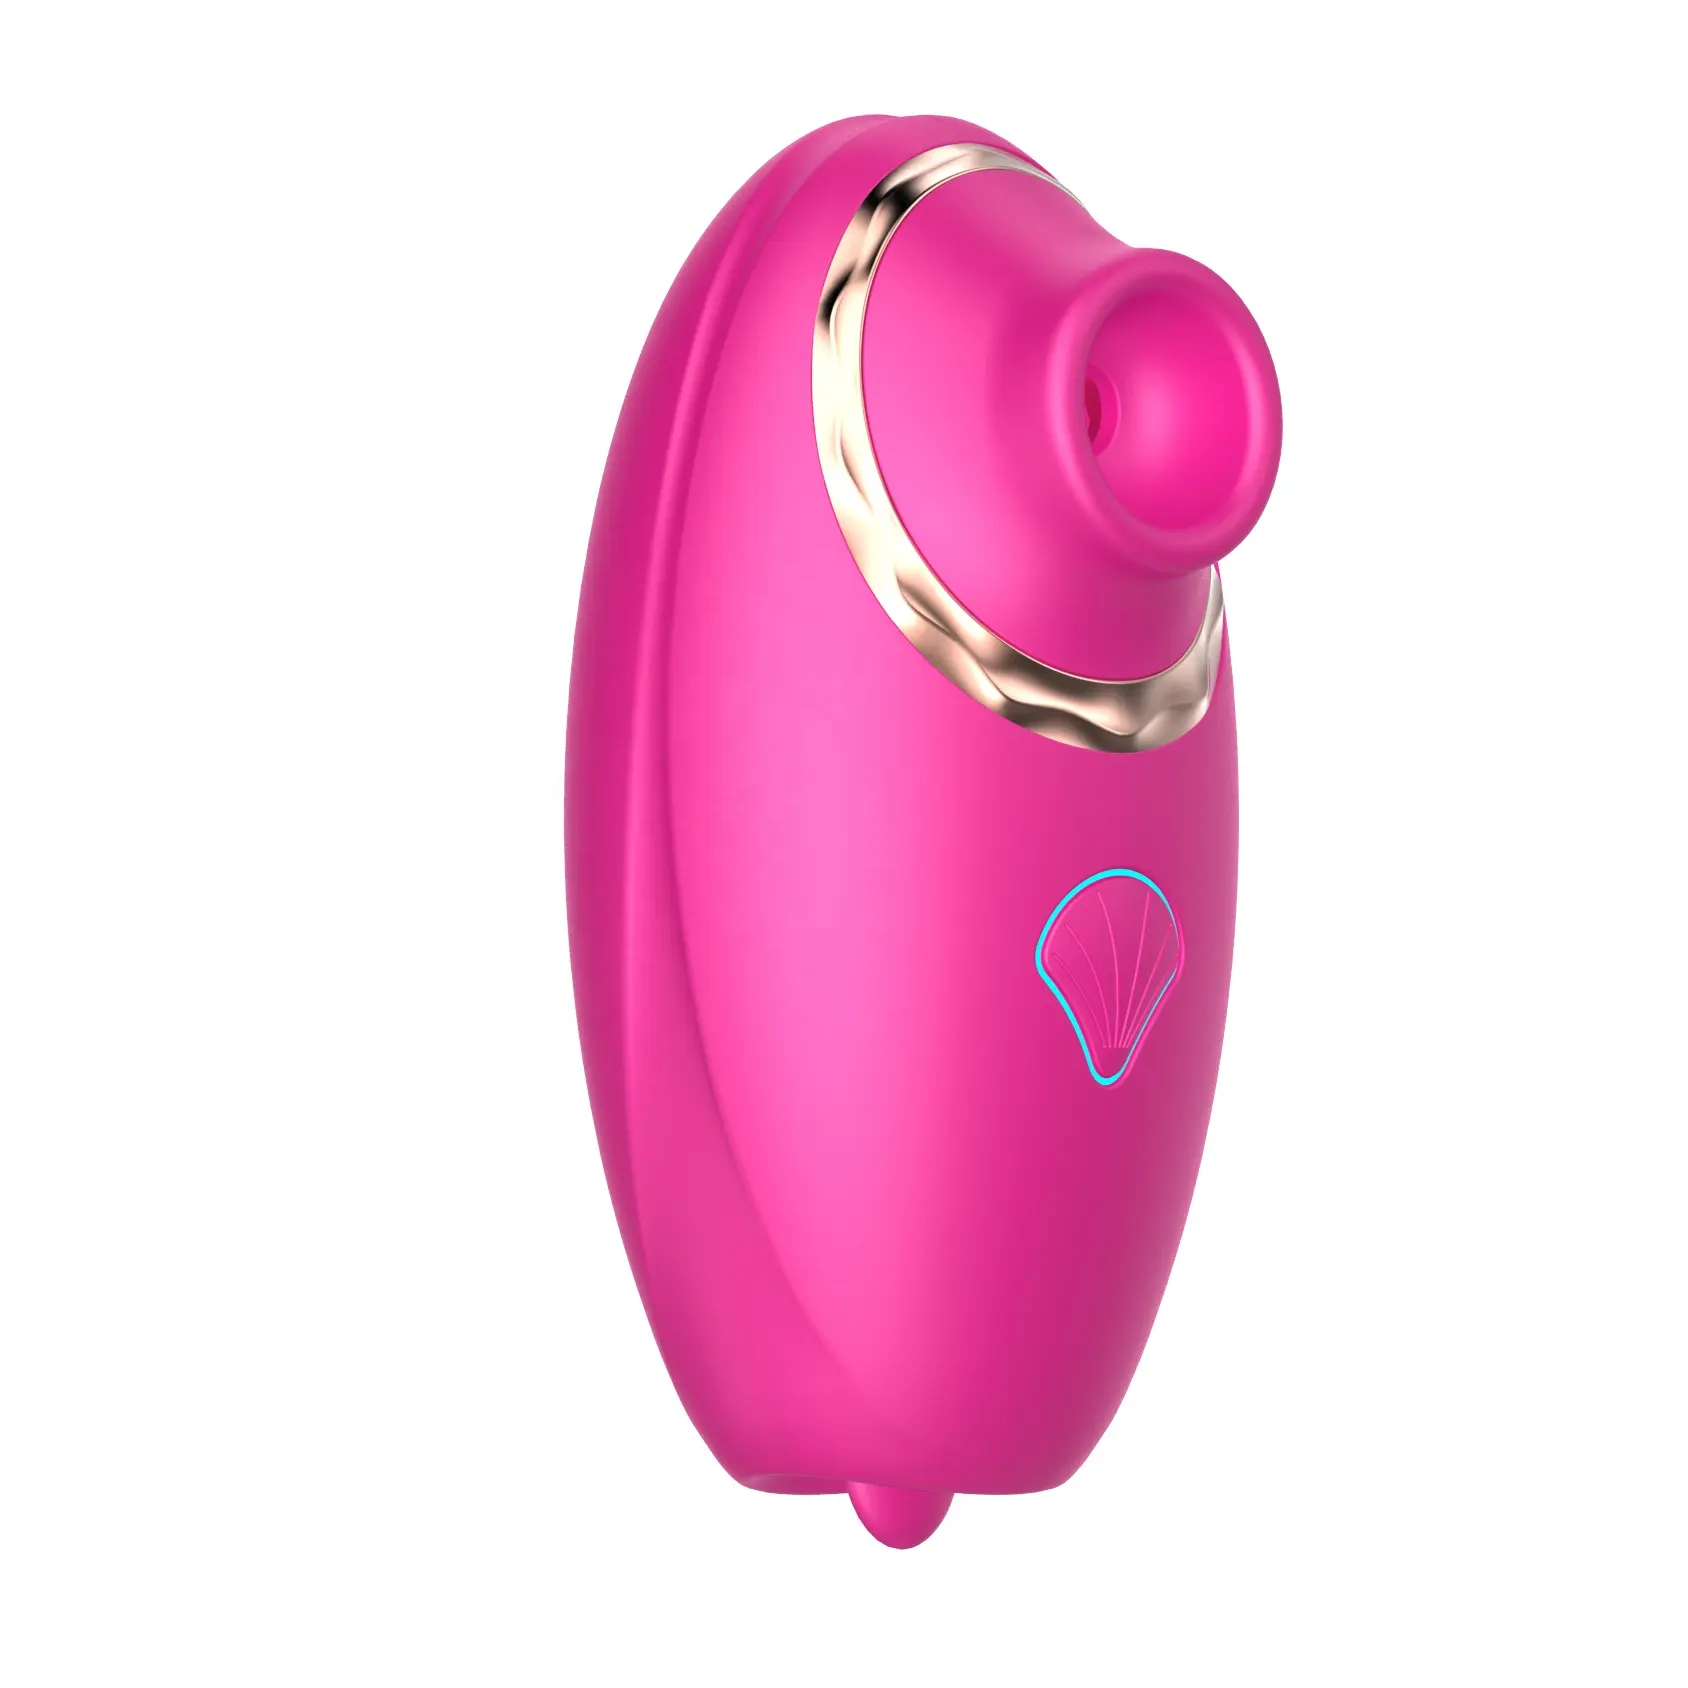 Emme dil isabet 3 in 1 vibratör Mini silikon emme vibratör dil isabet kız kadınlar için meme klitoris stimülasyon